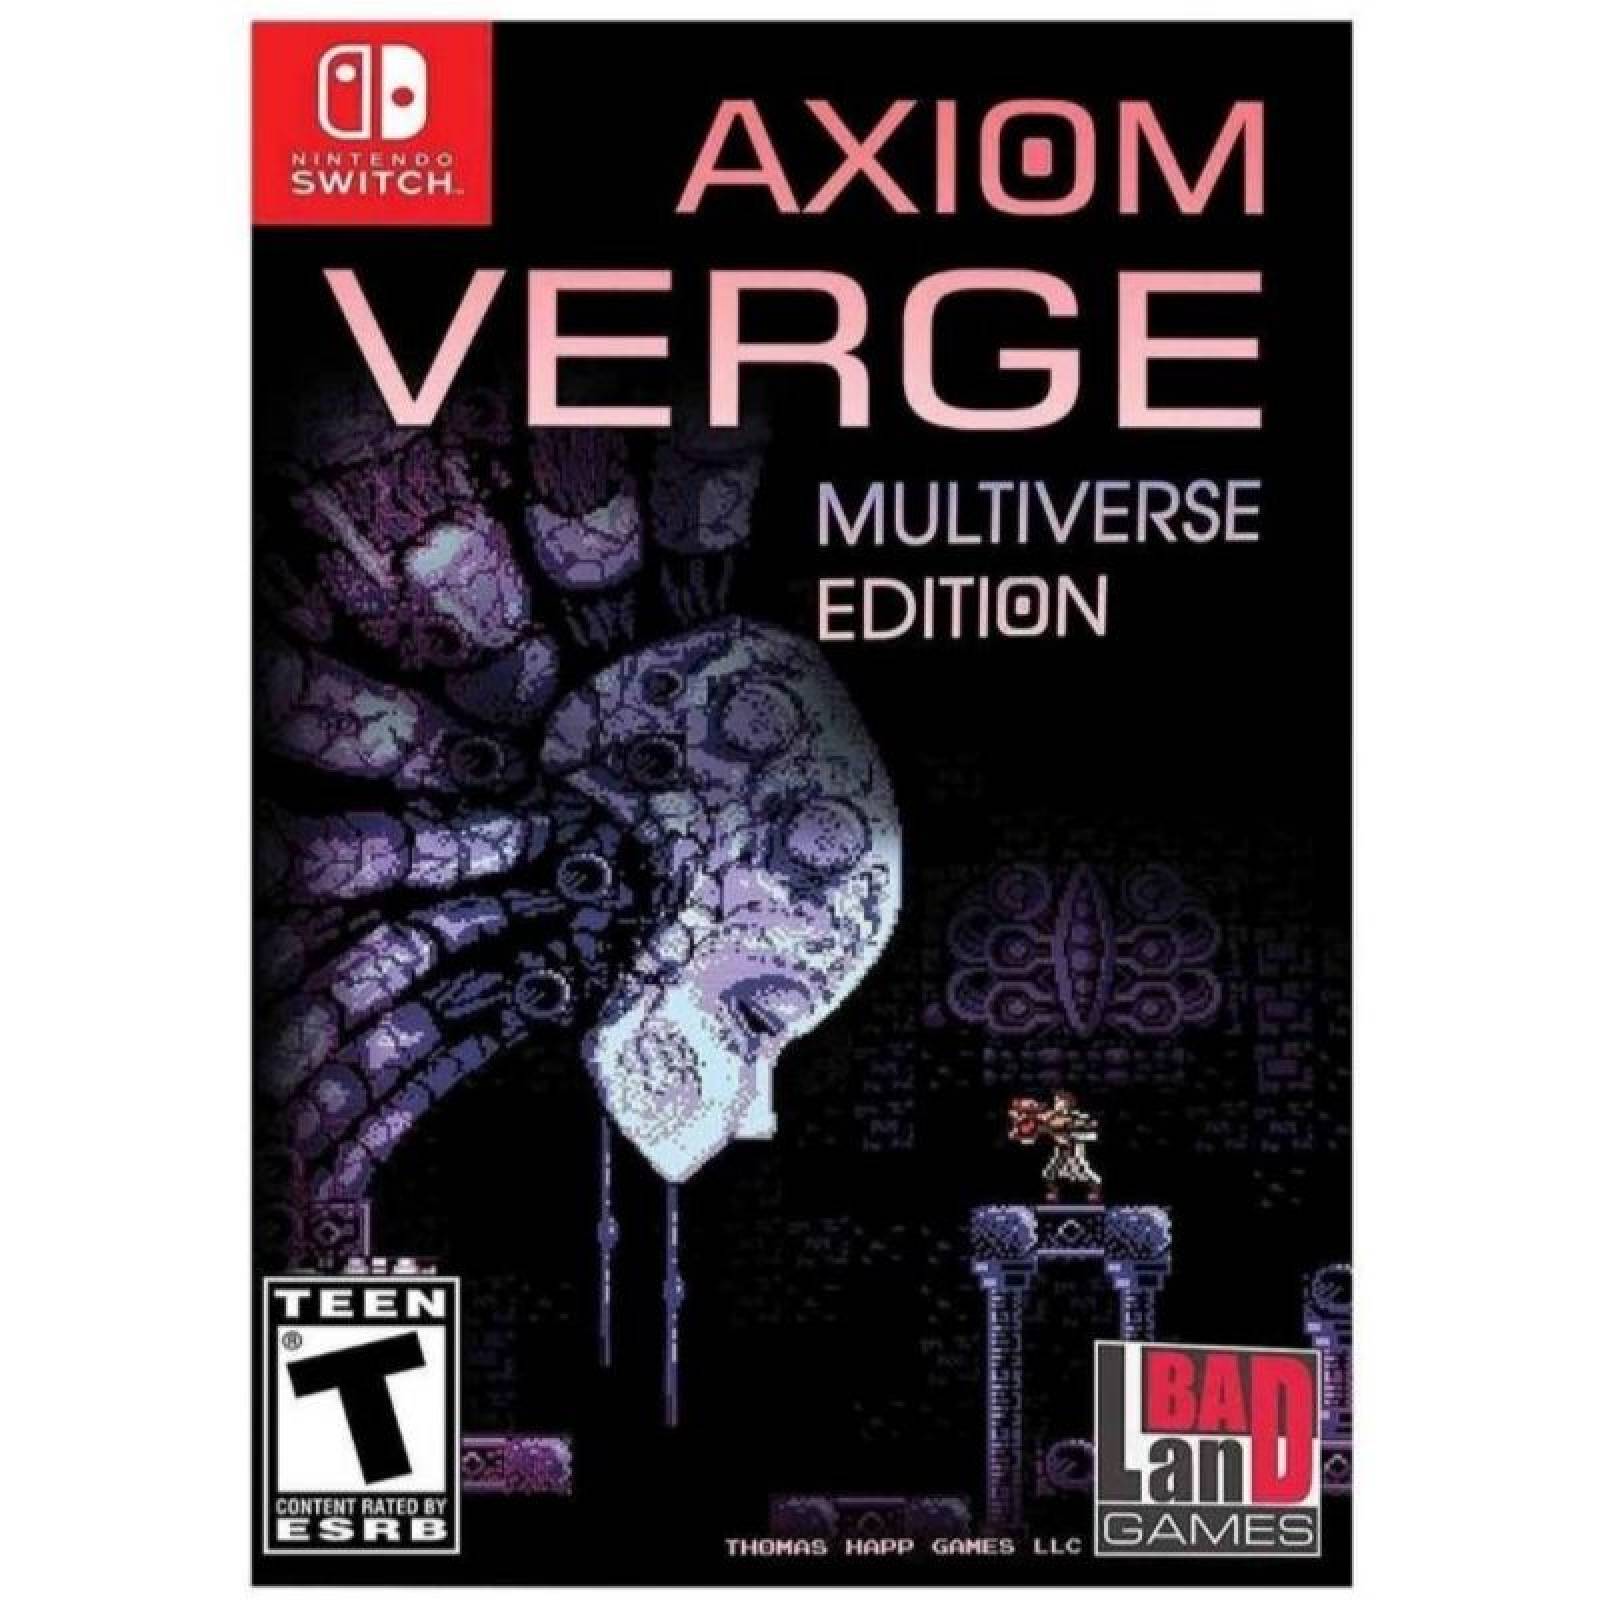 Axiom Verge Multiverse Edition NSW